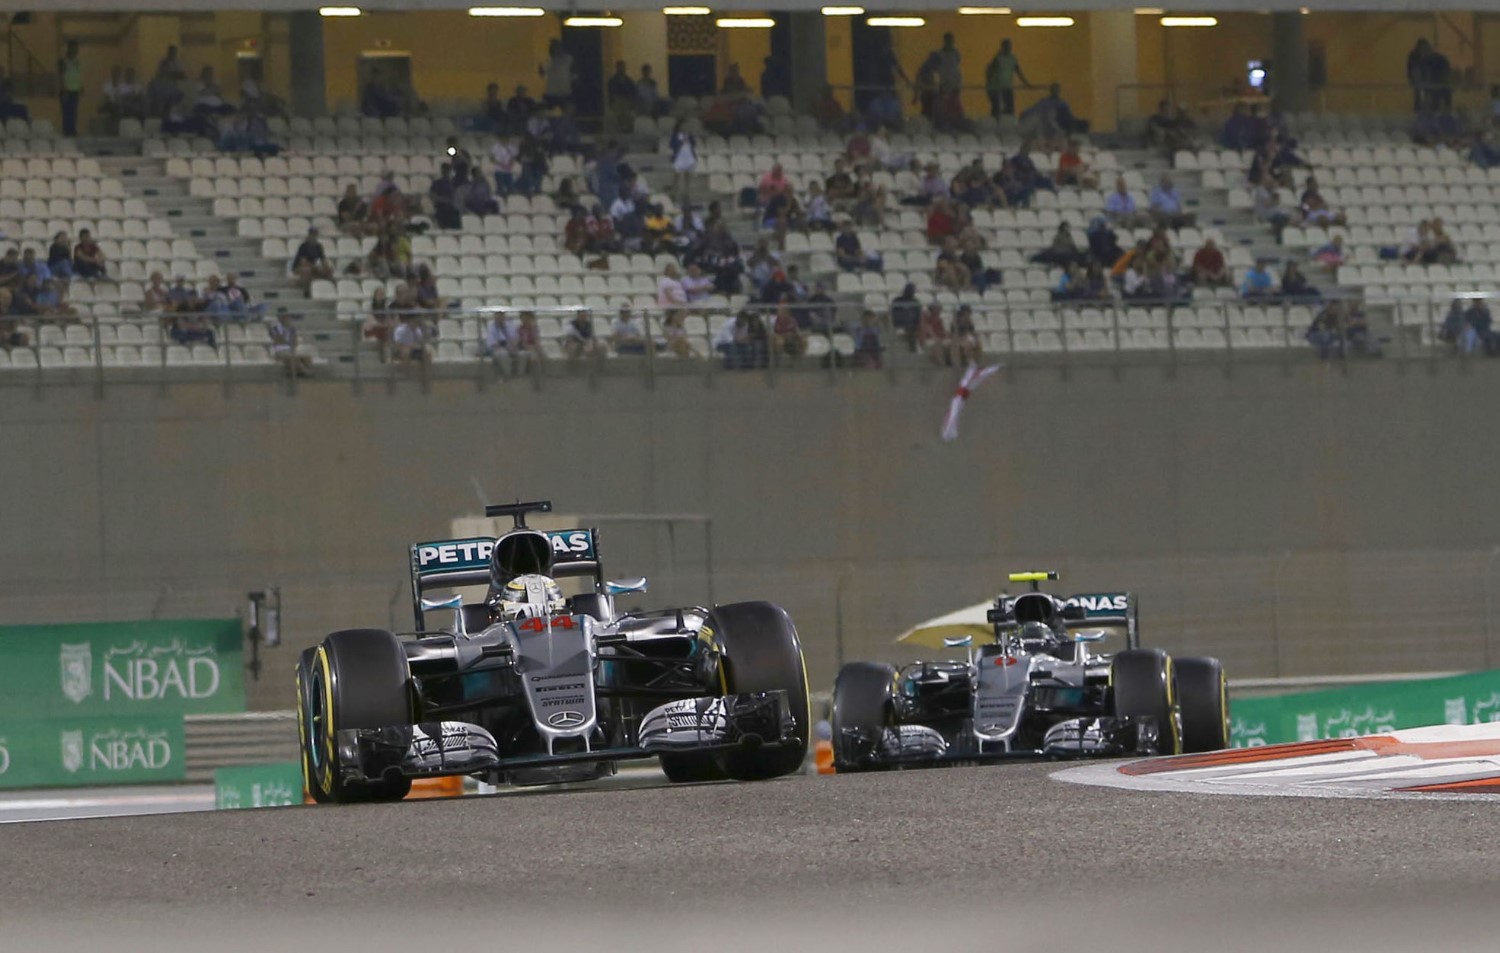 Hamilton and Rosberg practicing how to parade around Abu Dhabi